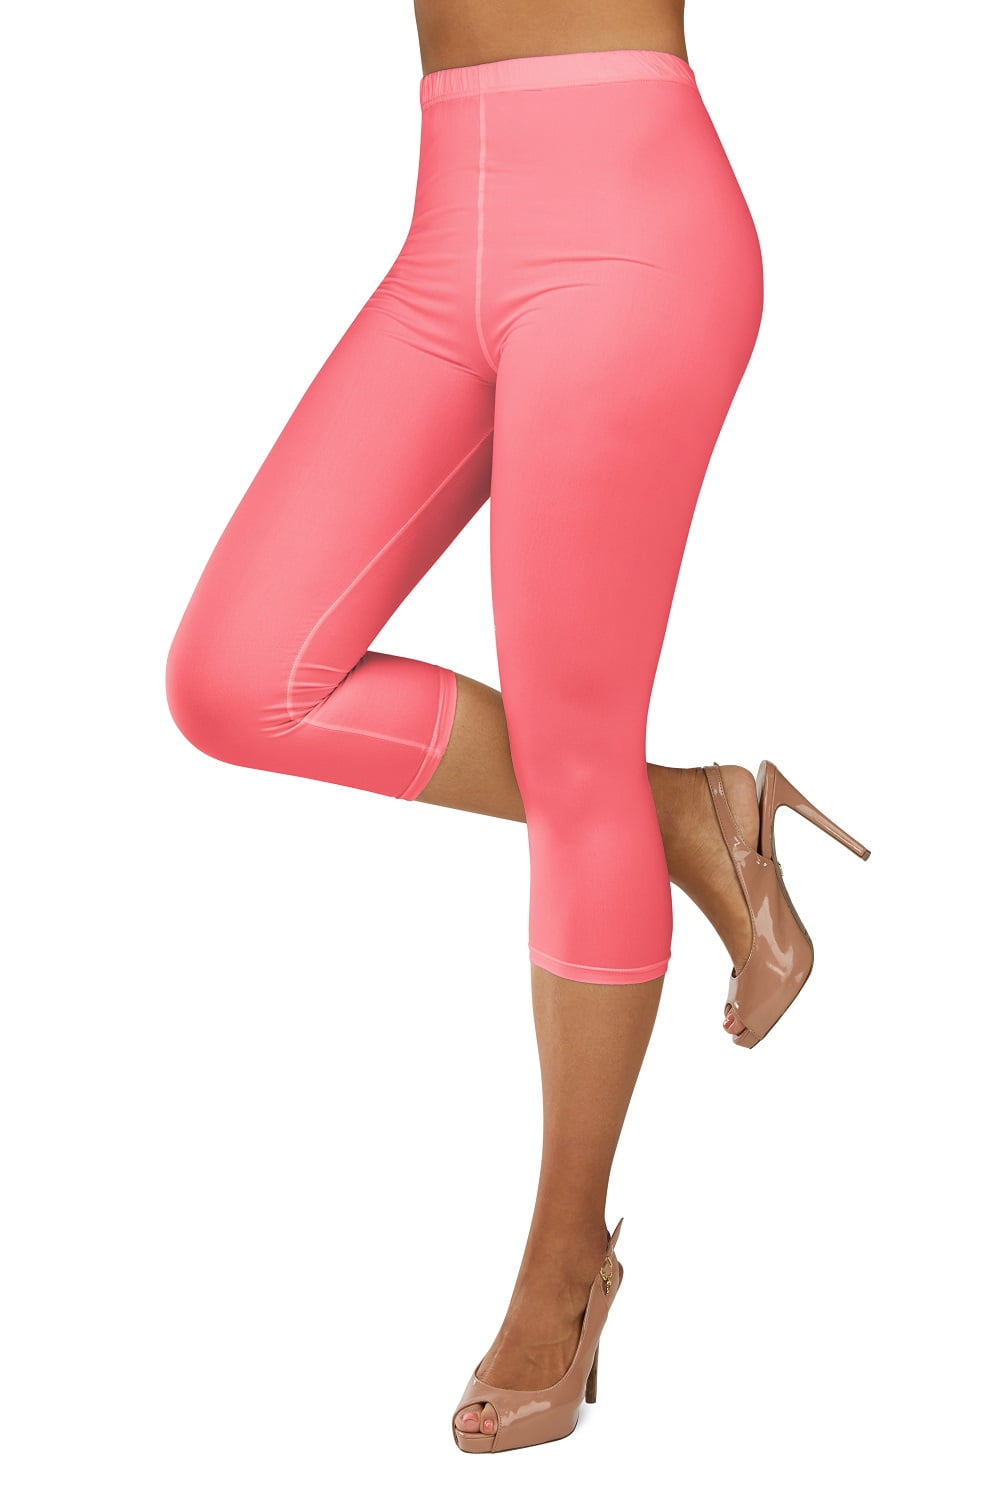 Gilbin Ultra Soft Capri High Waist Leggings for Women-Many Colors -One Size  & Plus Size (Nude S-L) 